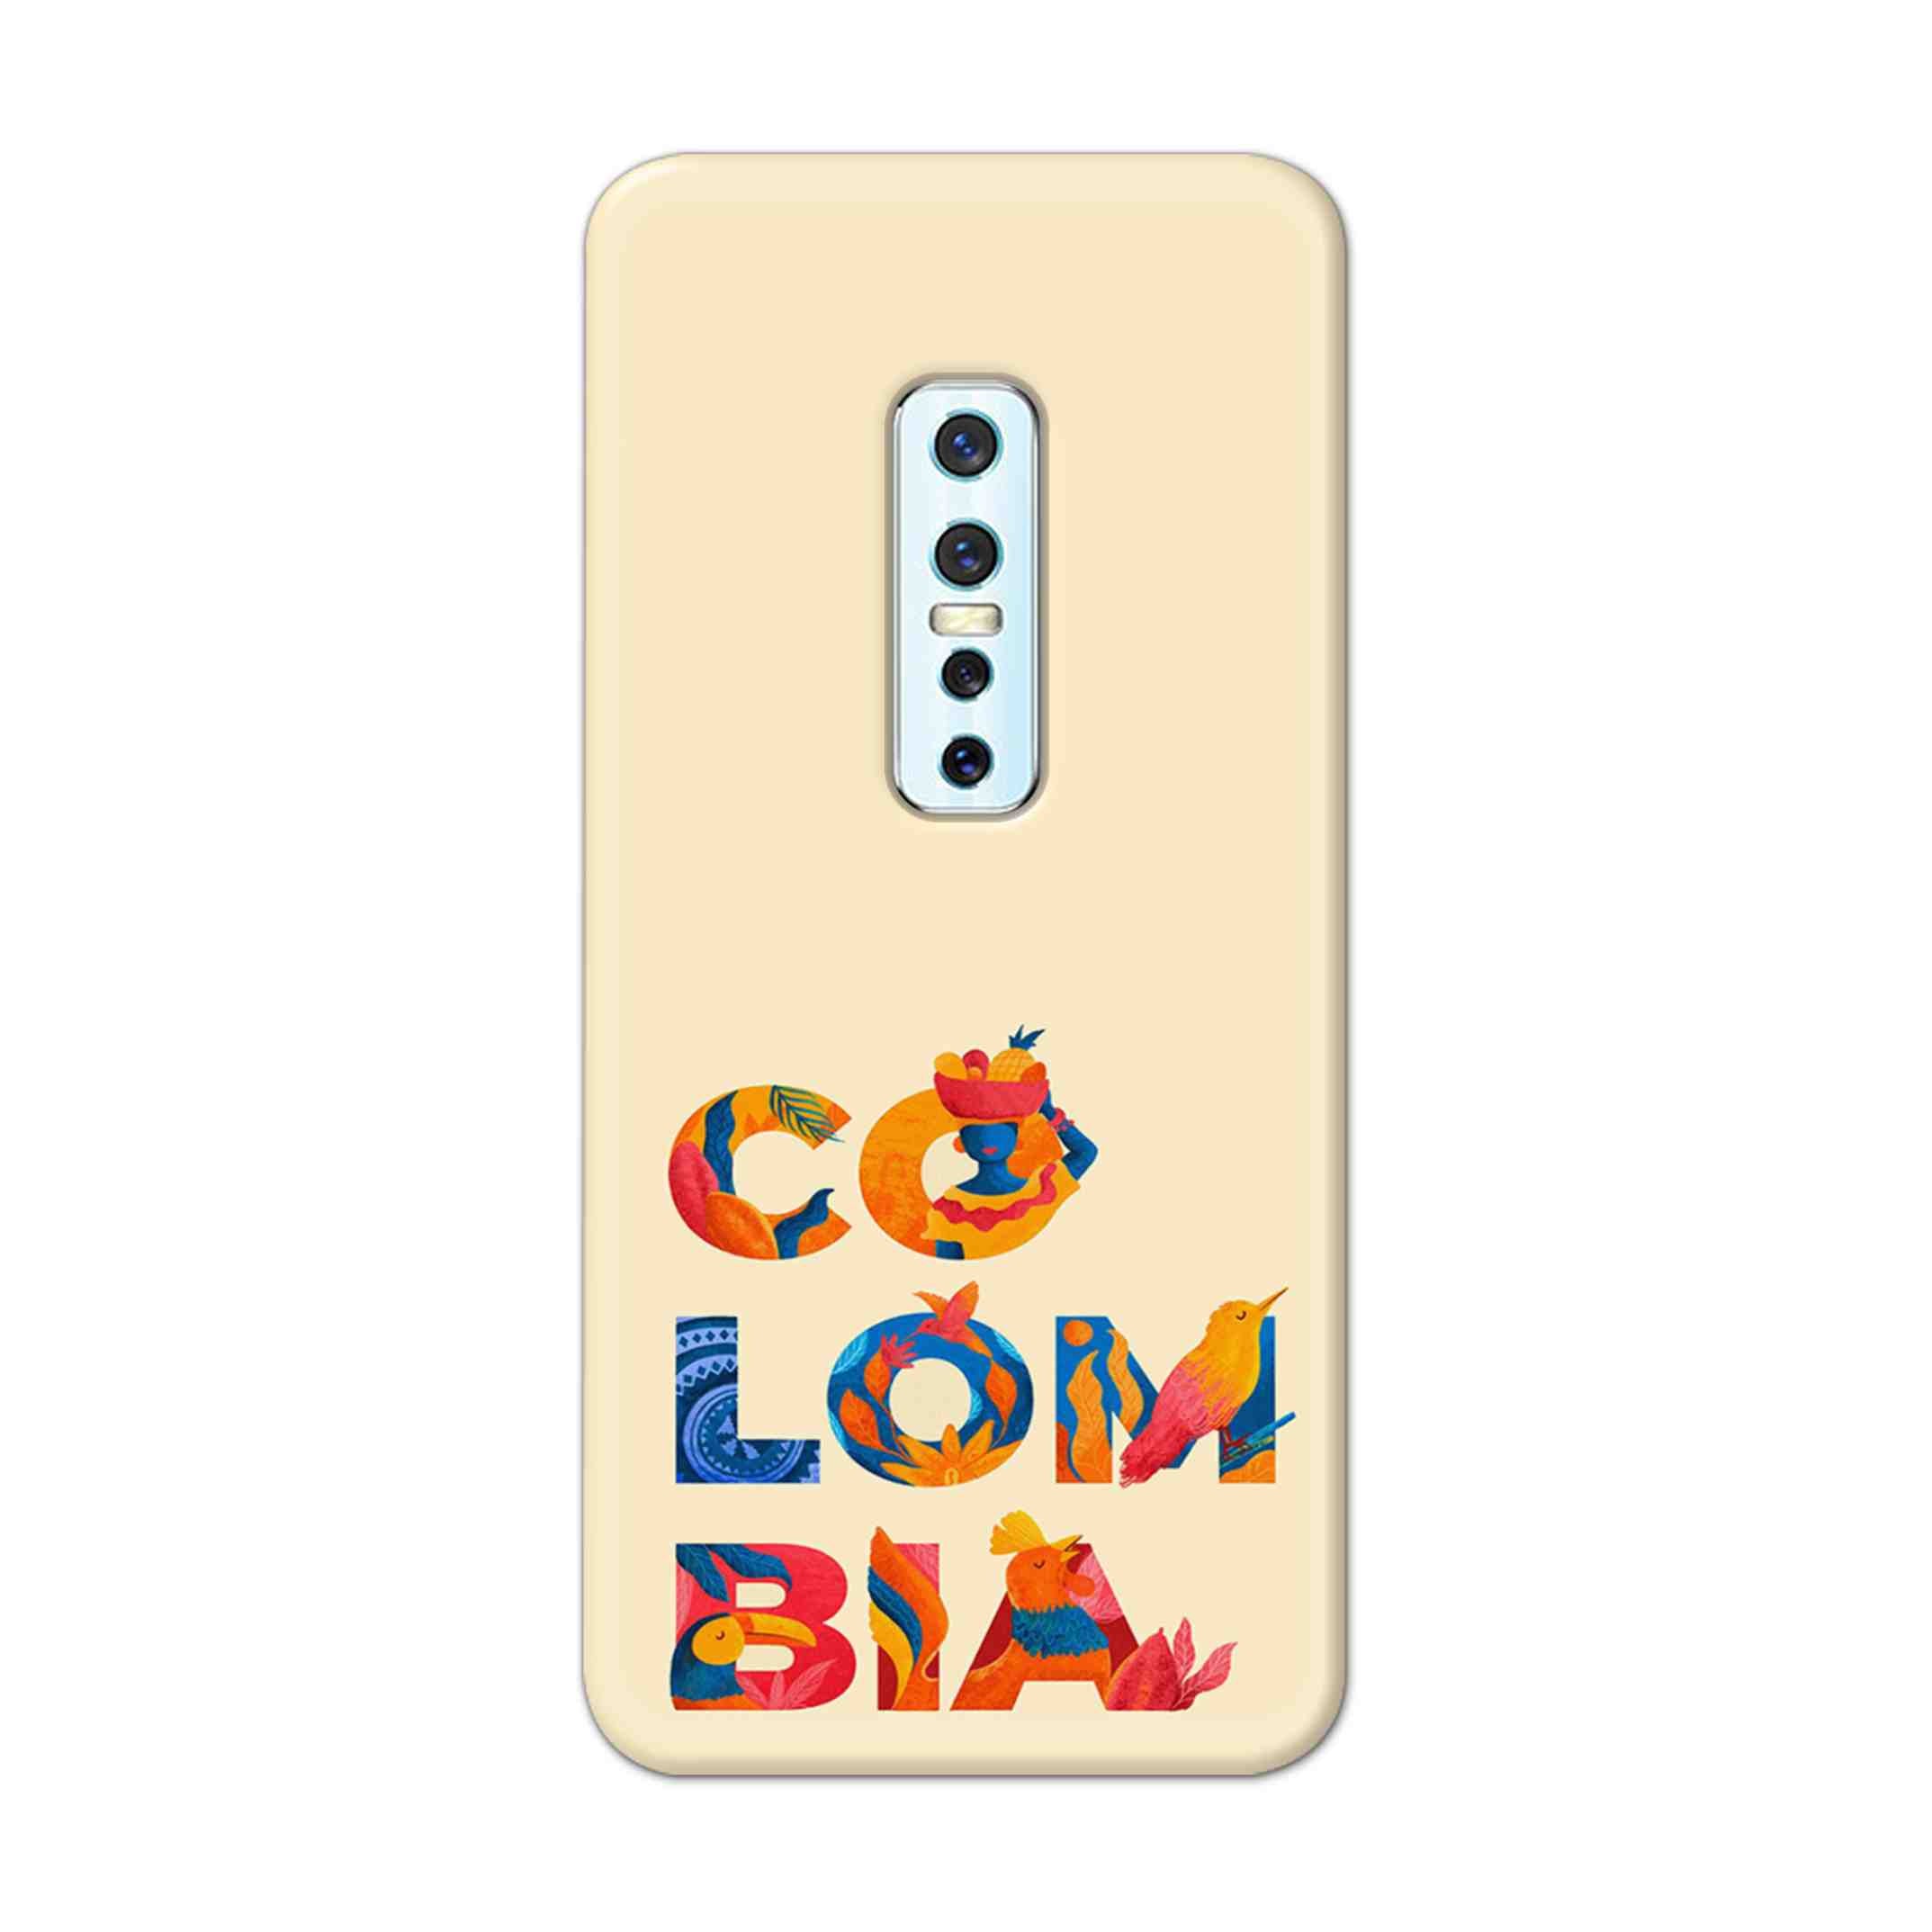 Buy Colombia Hard Back Mobile Phone Case Cover For Vivo V17 Pro Online